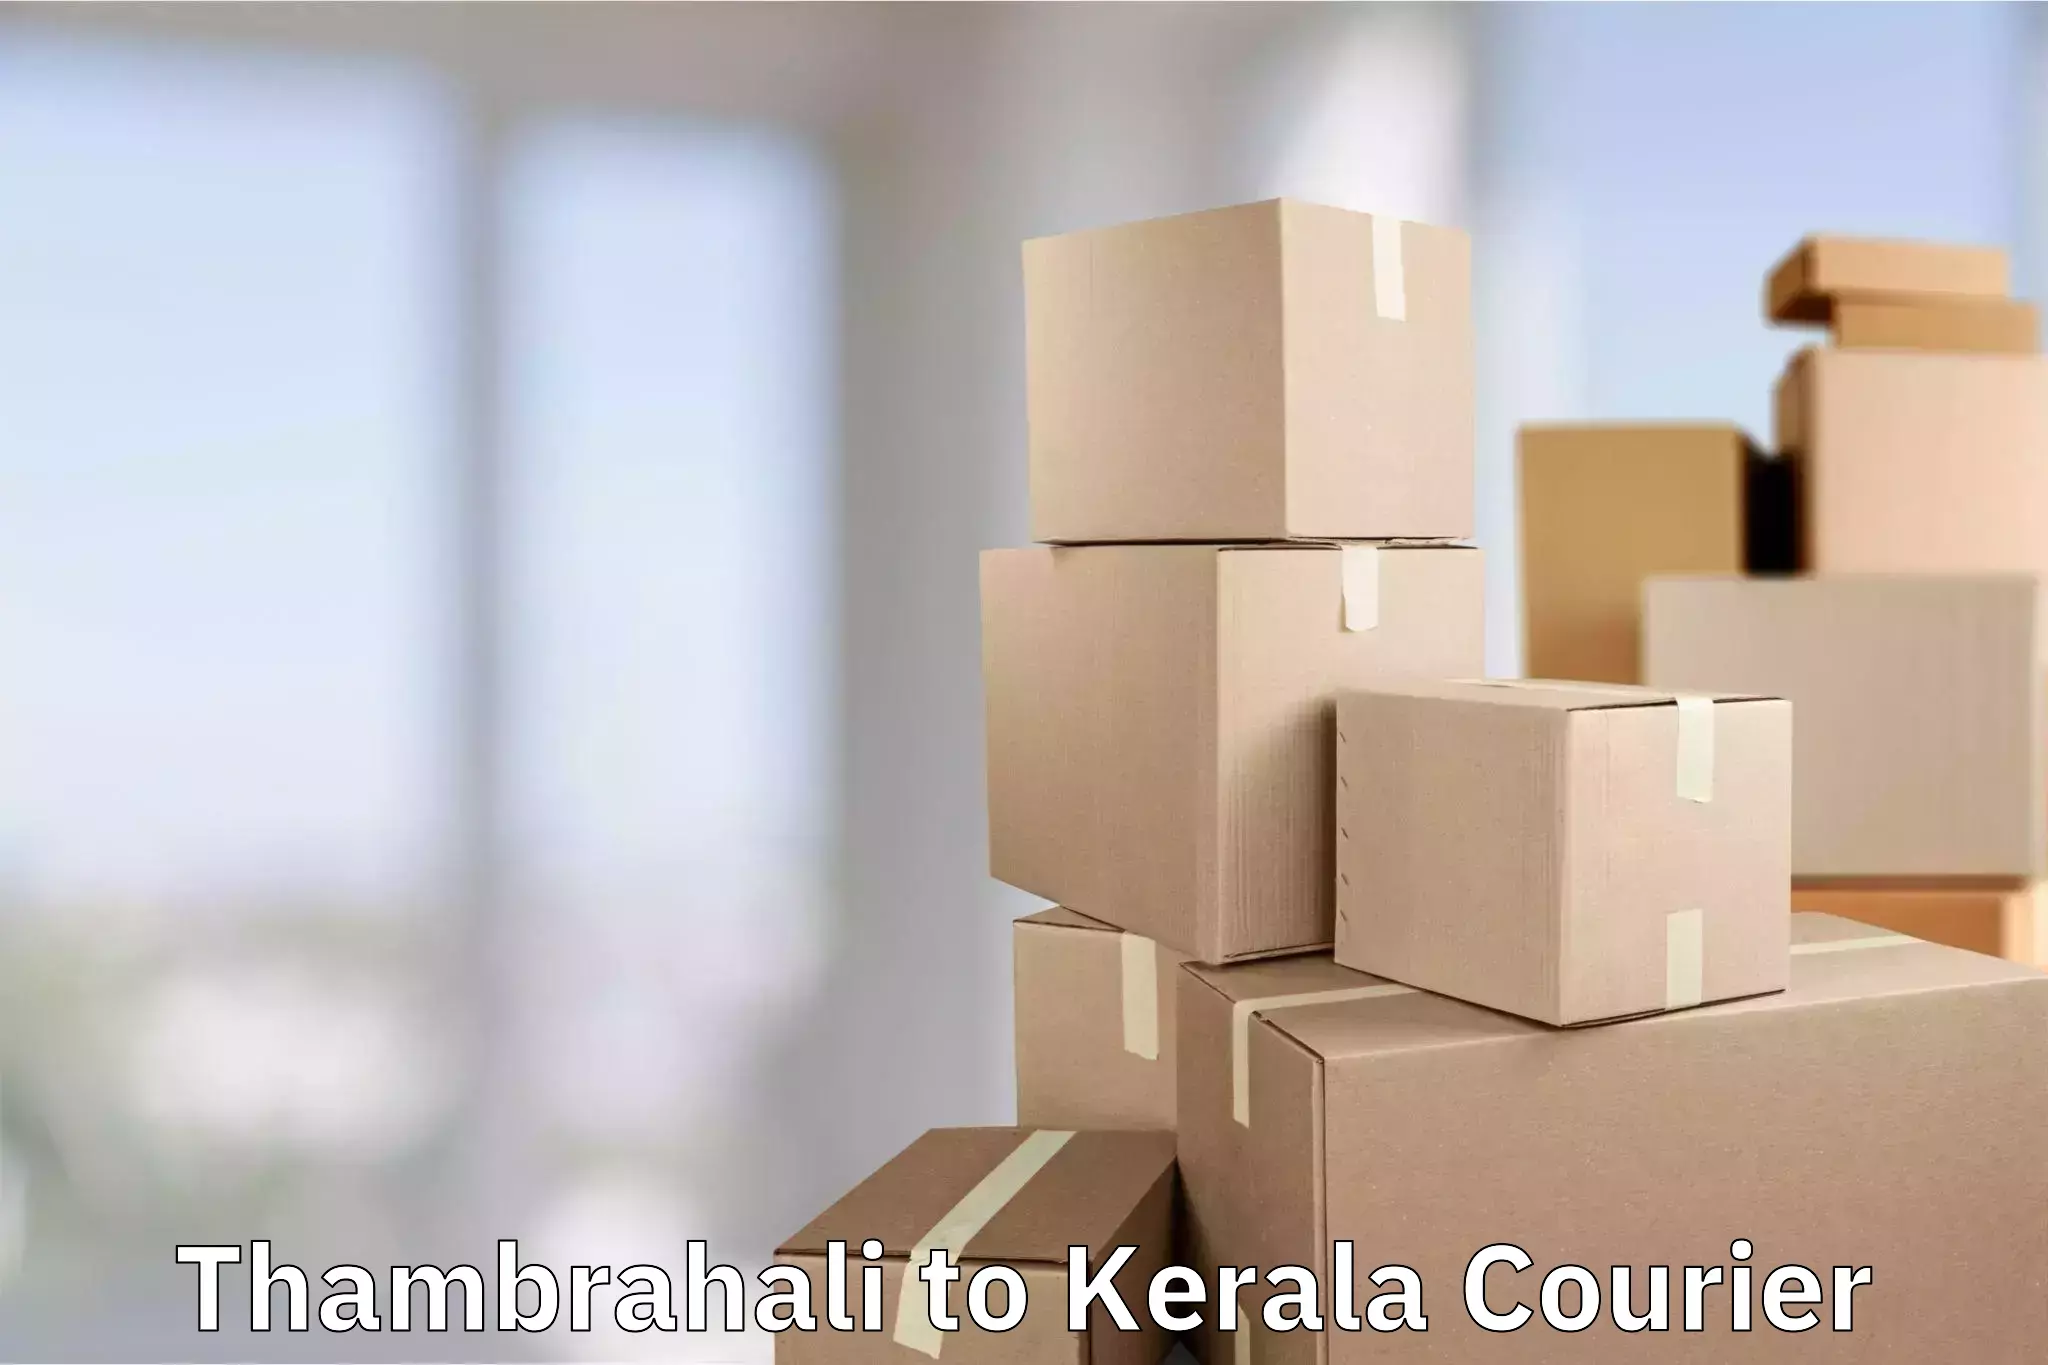 Luggage transport consultancy Thambrahali to Kerala